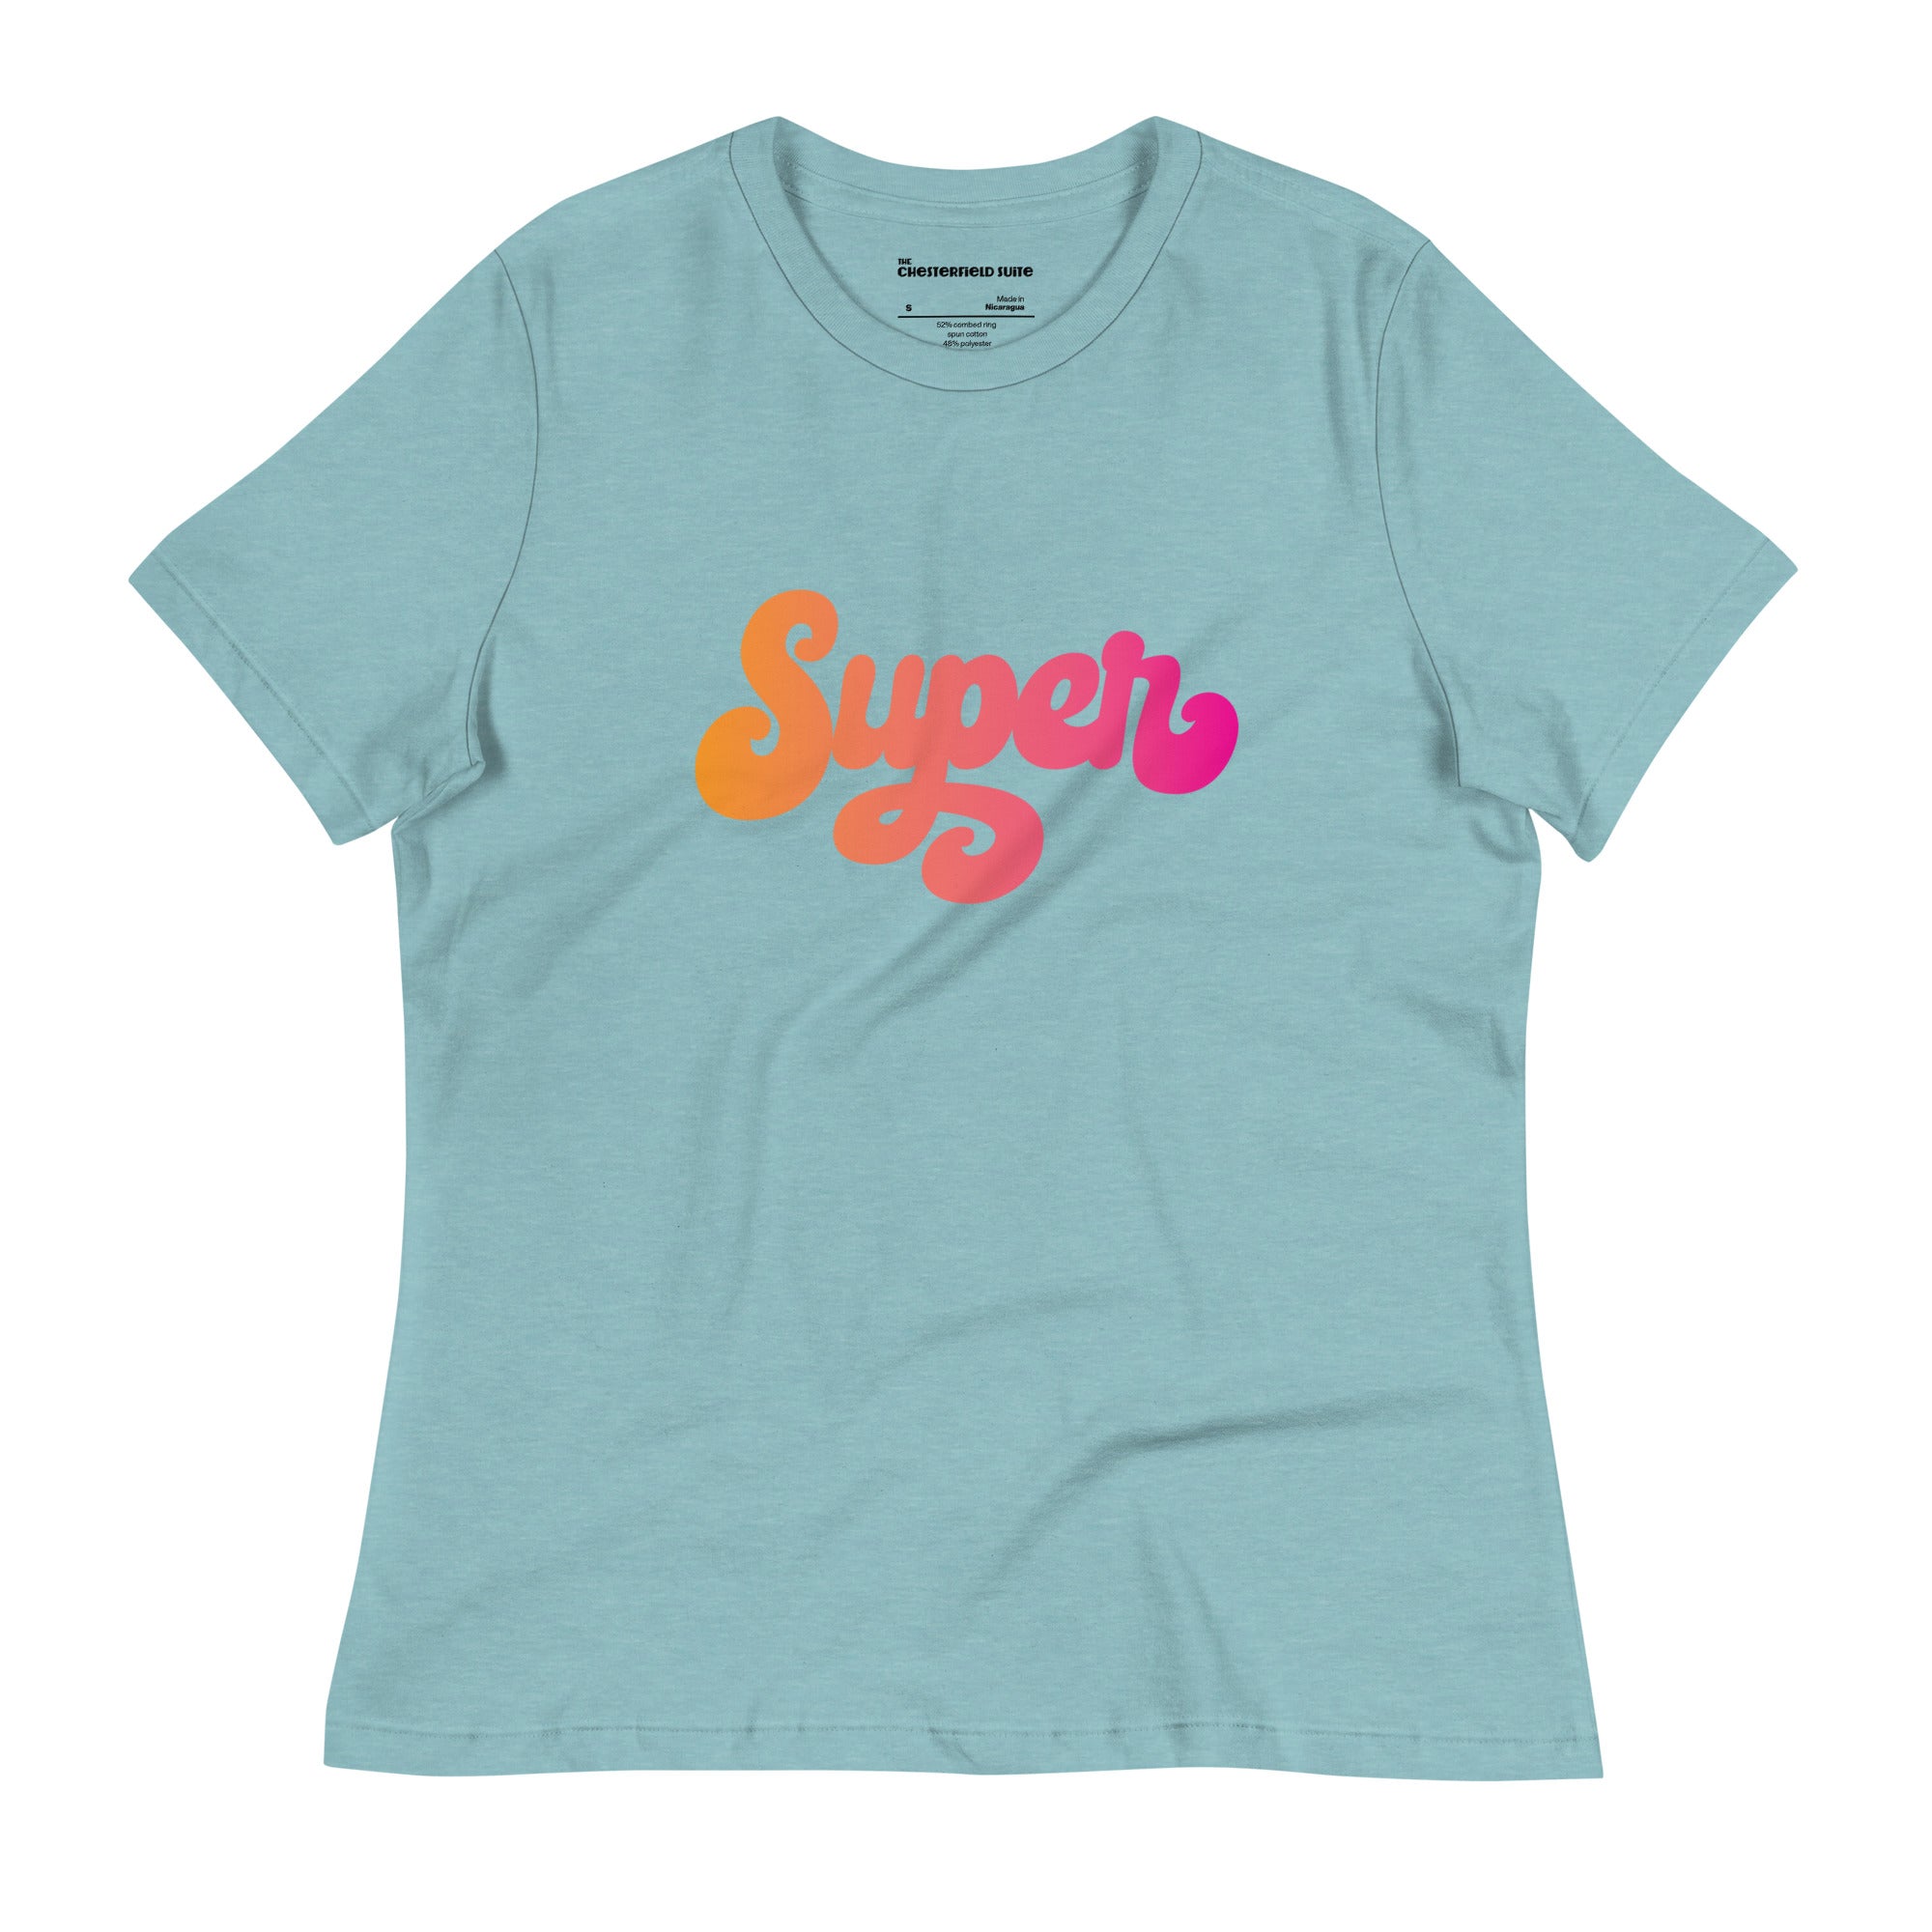 the word Super written in a pink blend cursive lettering on light blue women's t-shirt